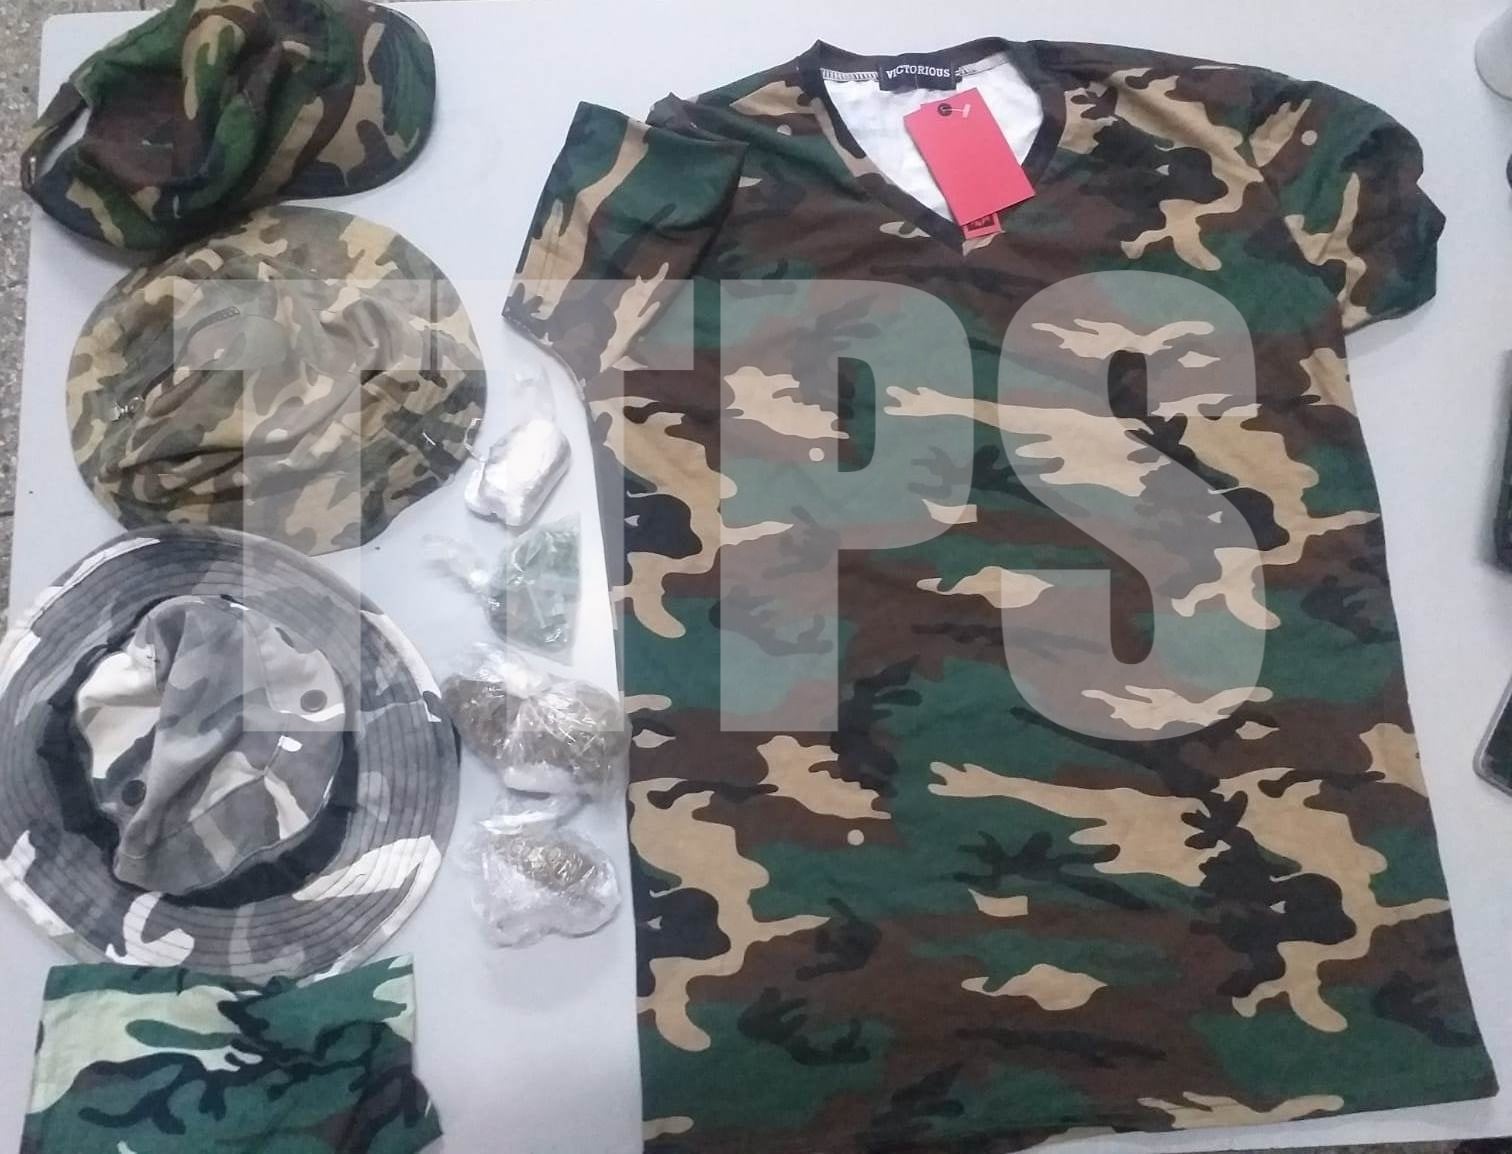 Police seize camouflage clothing, ammo and marijuana in POS